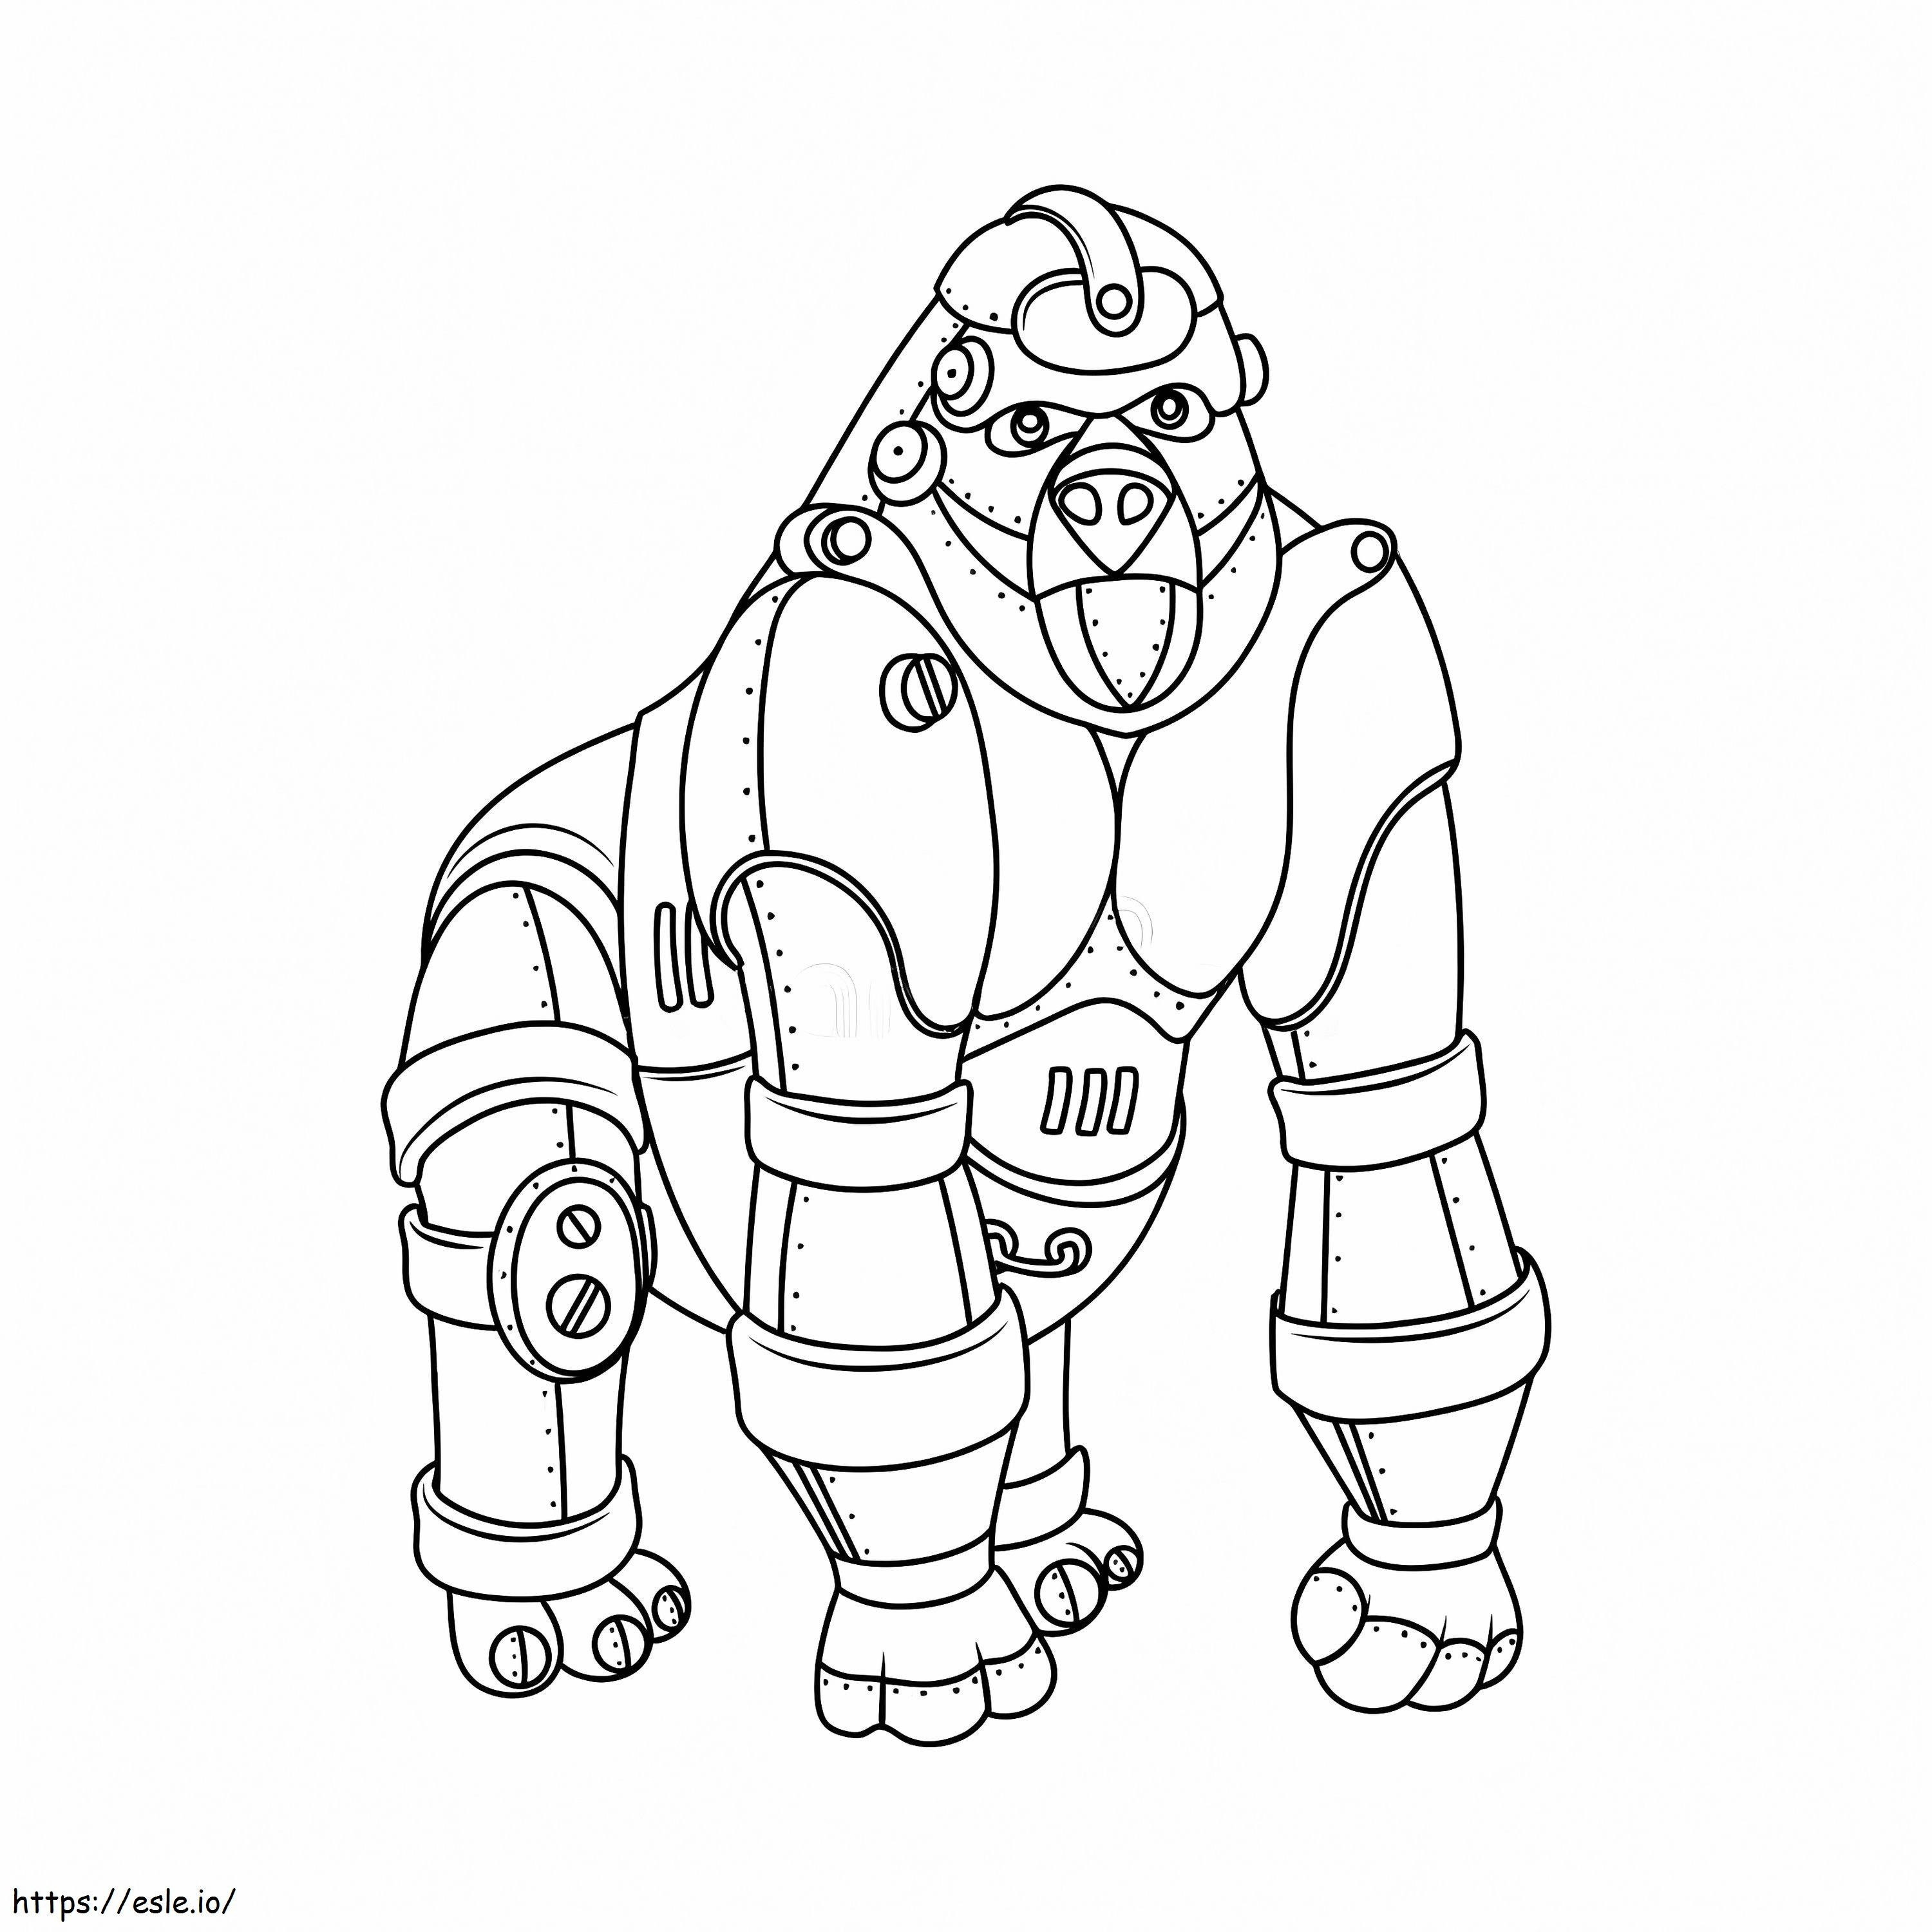 Gorilla Robot coloring page